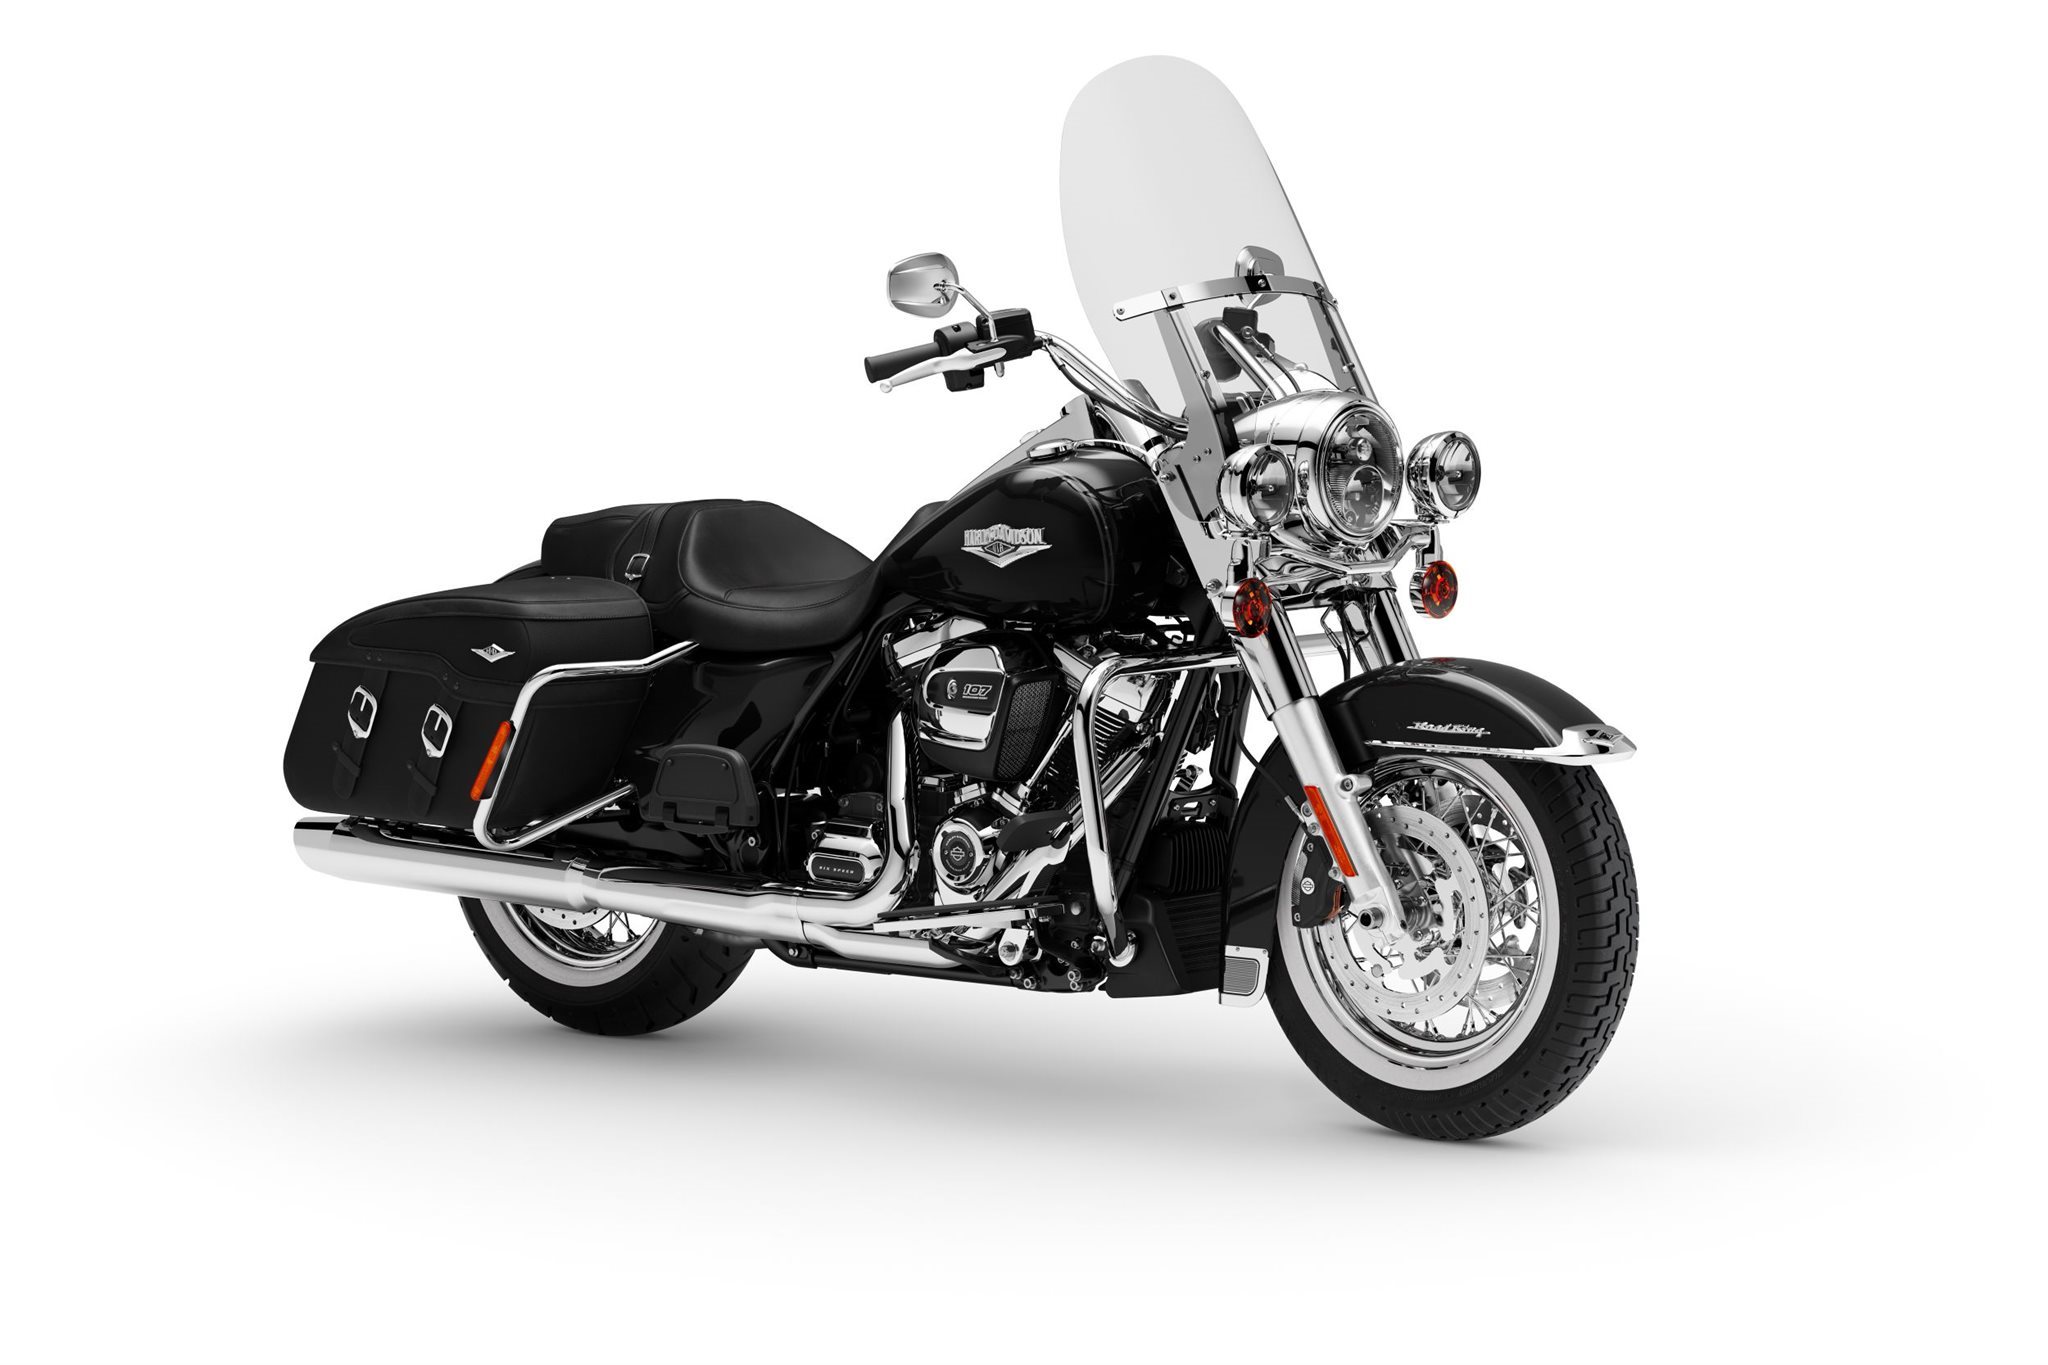 Motorrad Vergleich Indian Chief 2019 Vs Harley Davidson Road King Classic Flhrc 2020